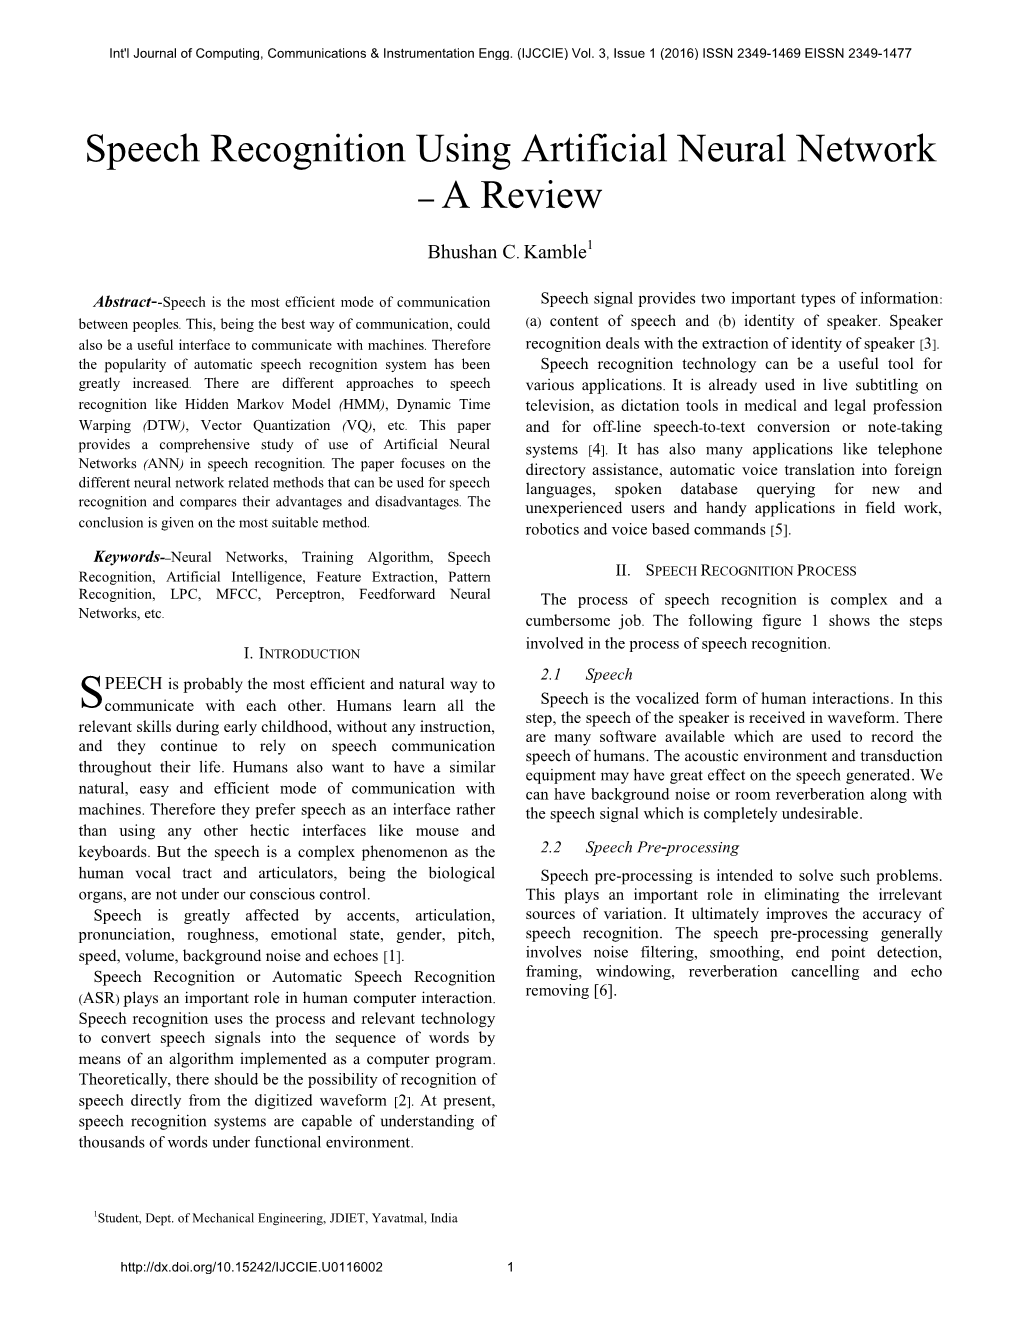 Speech Recognition Using Artificial Neural Network – a Review